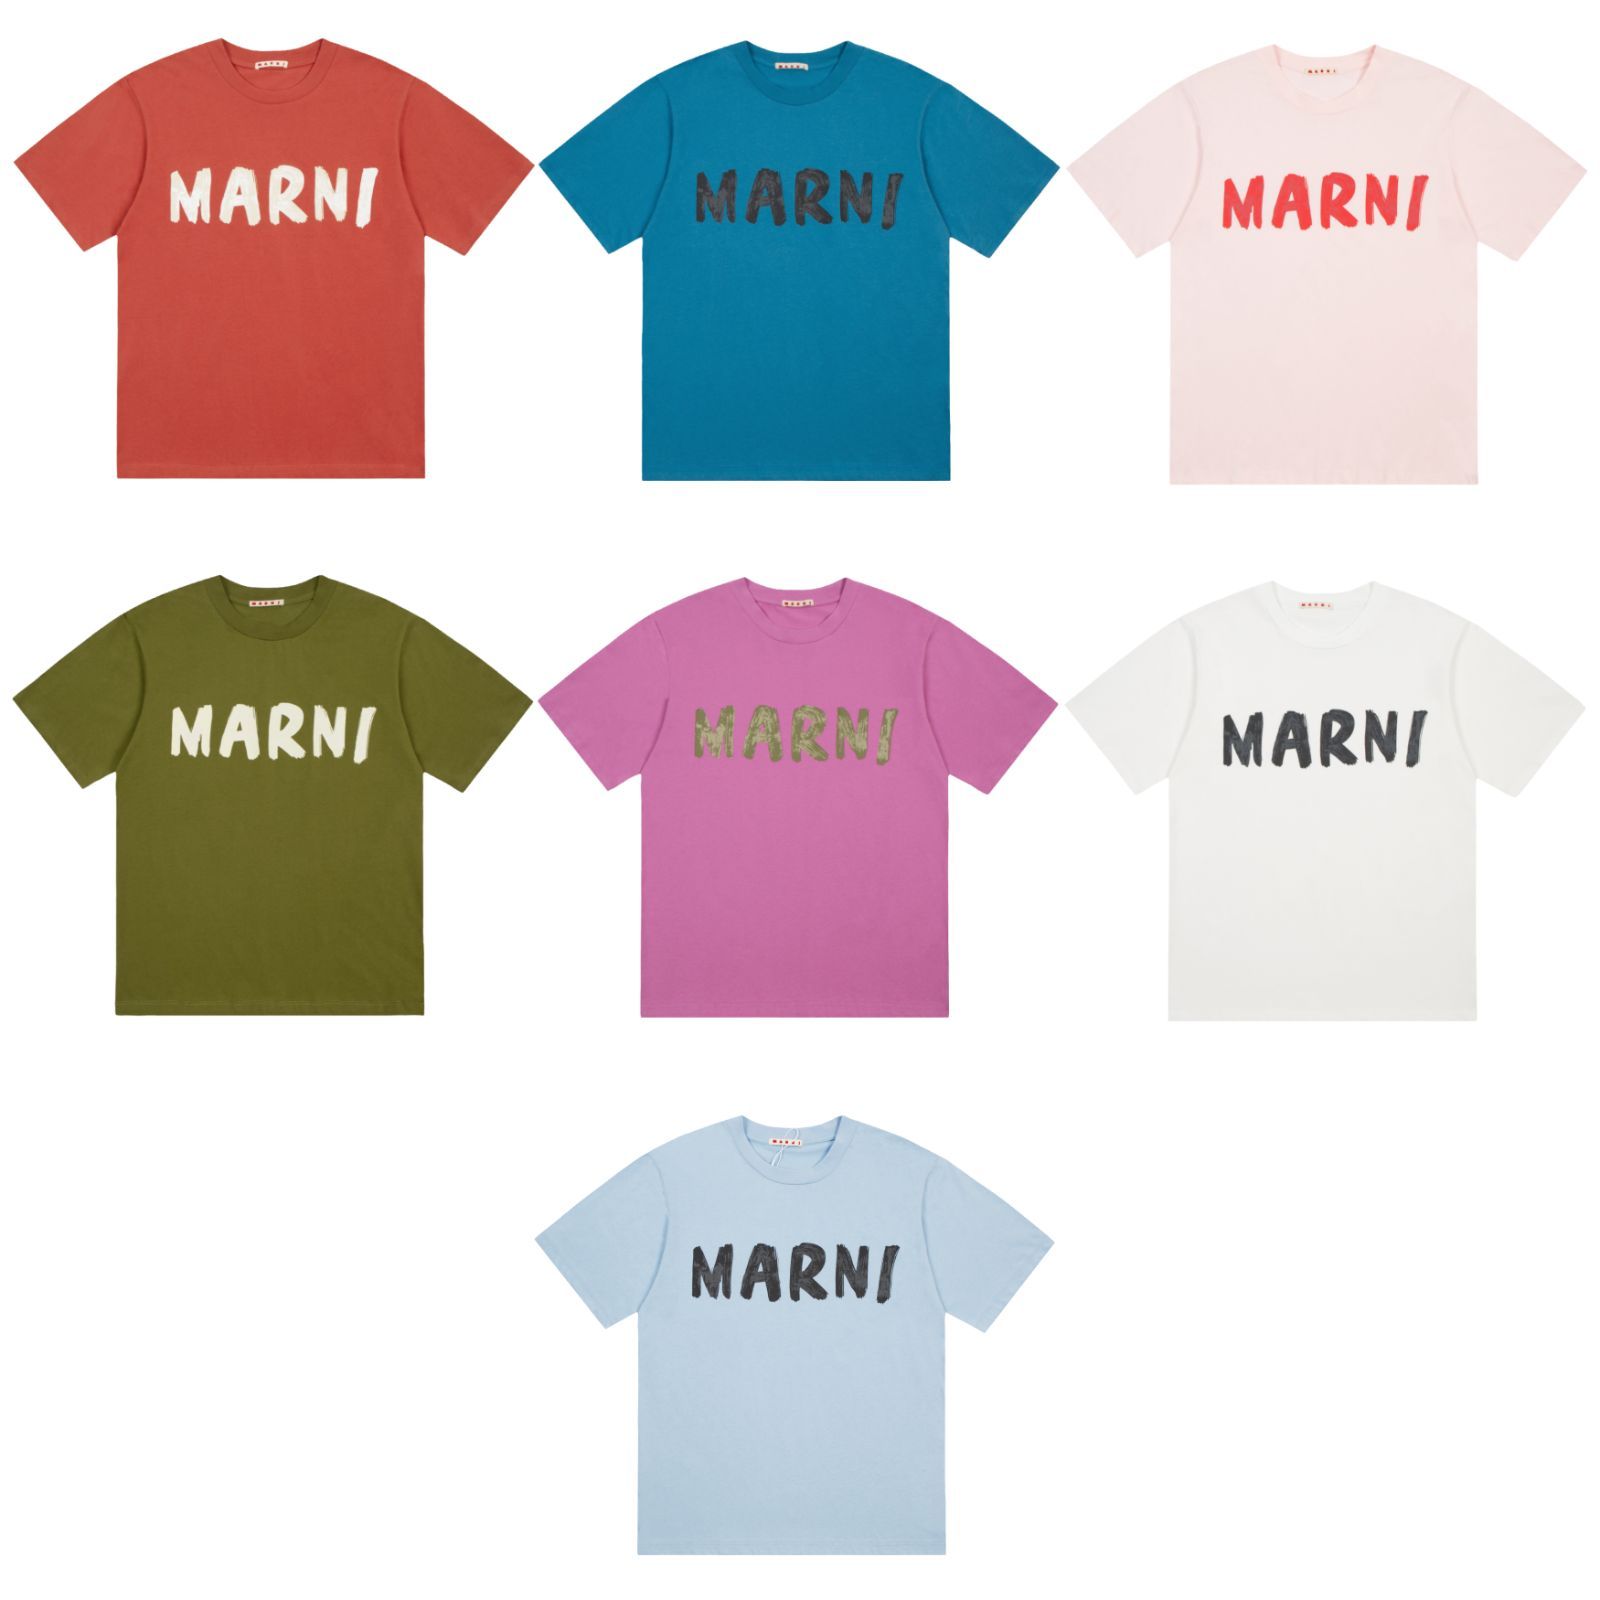 Marni マル二 Tシャツ 春夏 男女兼用 S-XLサイズ 7色選択可能 - メルカリ